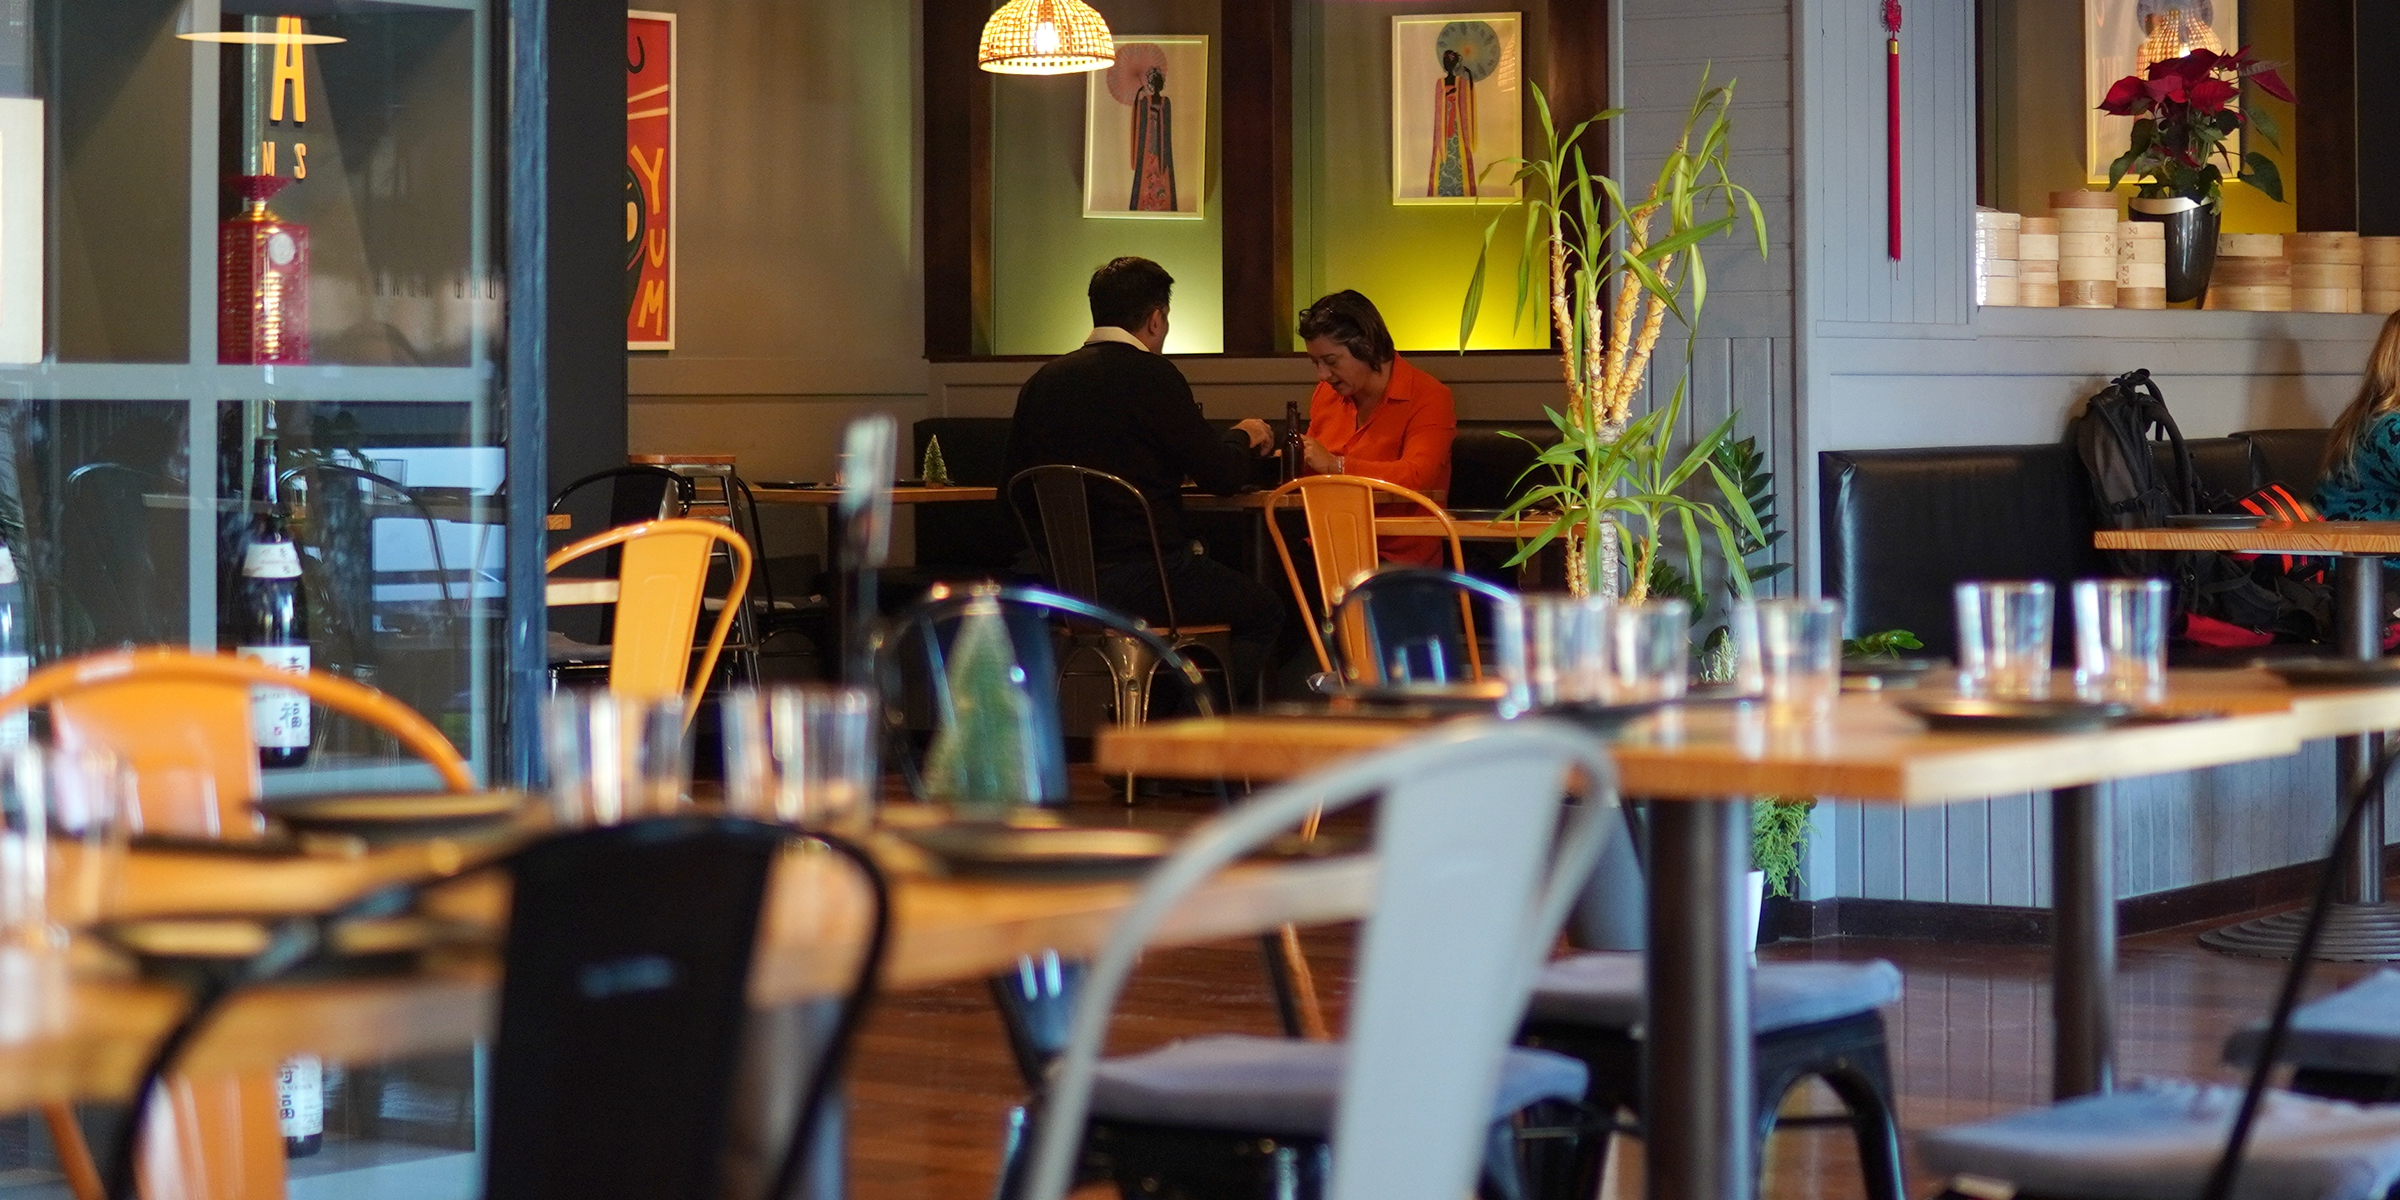 Dîneurs dans un restaurant prestigieux | Source : Shutterstock